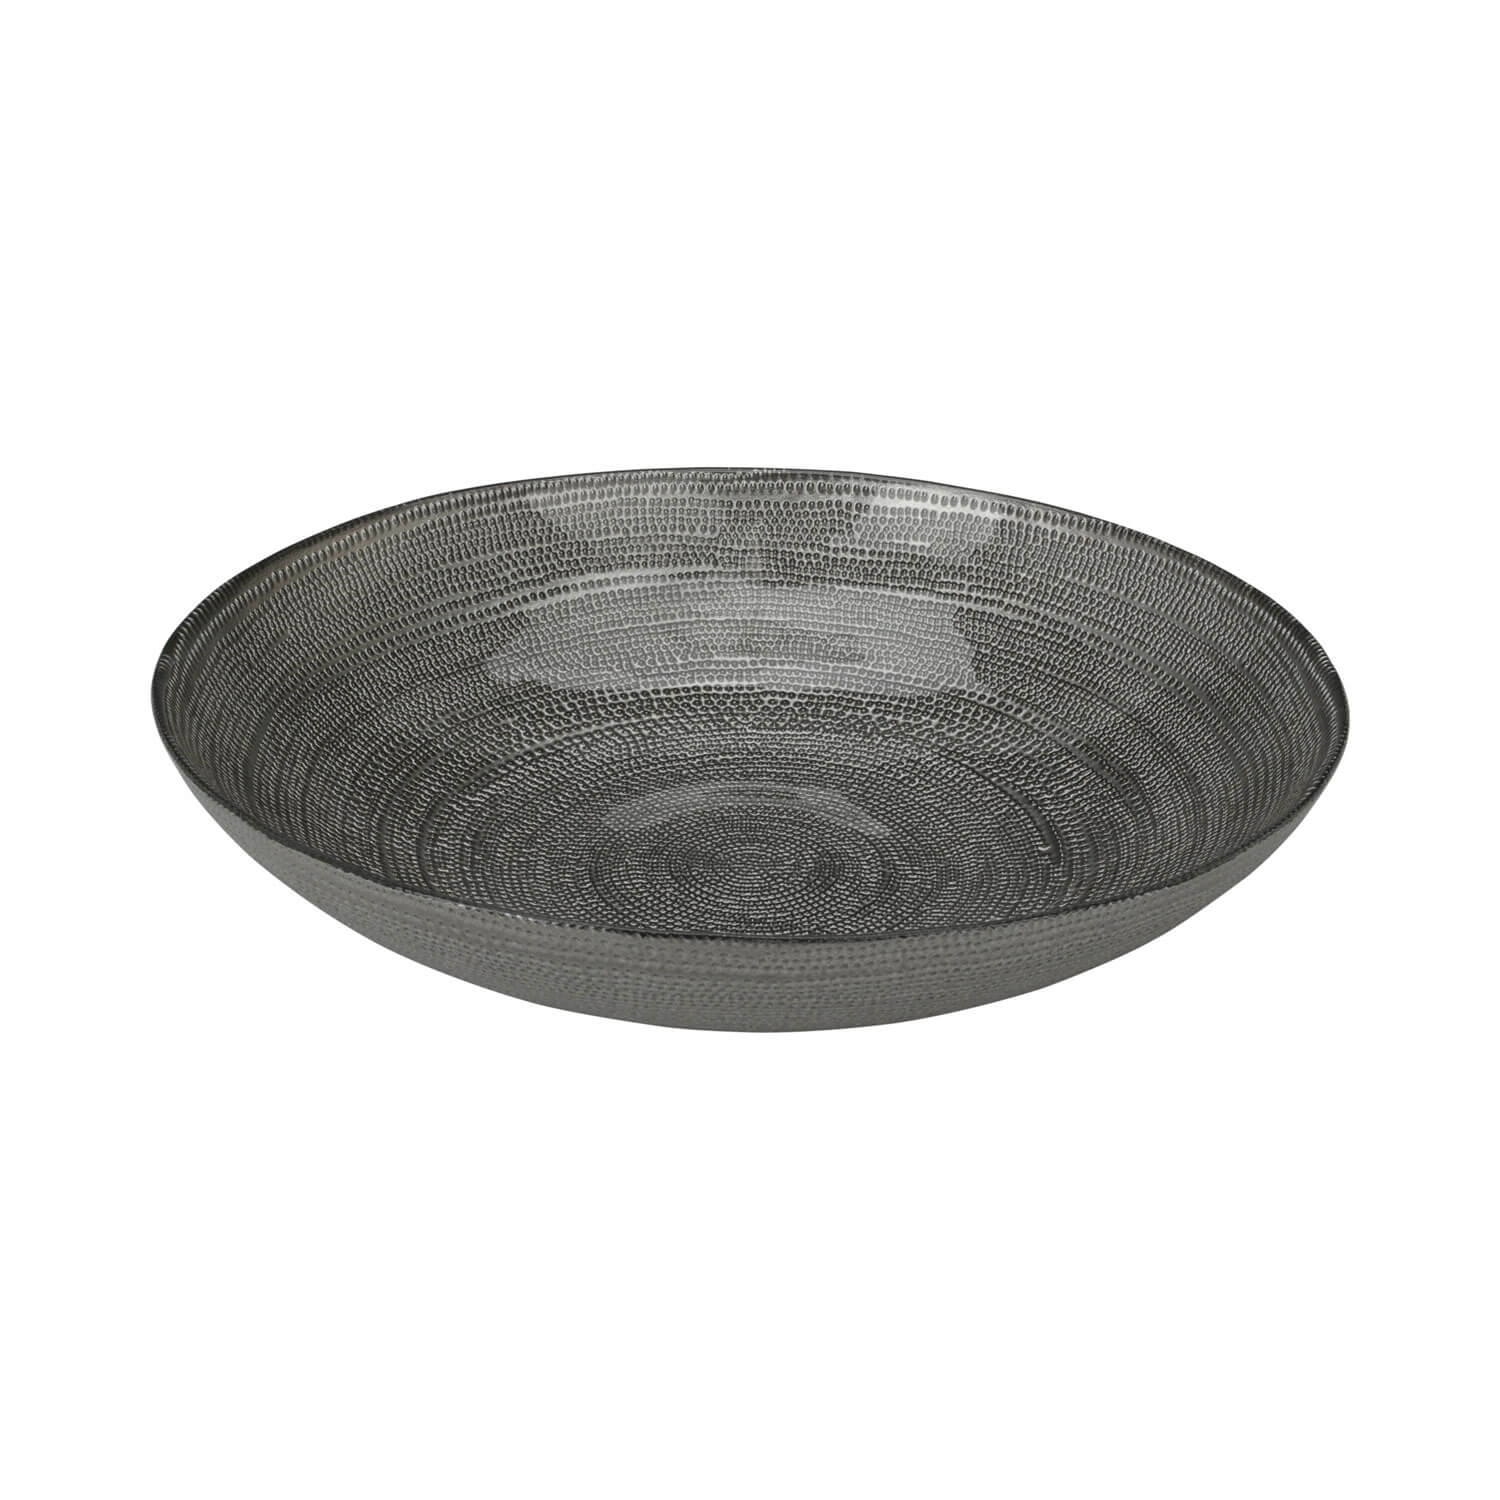 The Home Kitchen Glass Bowl - Dark Grey 1 Shaws Department Stores